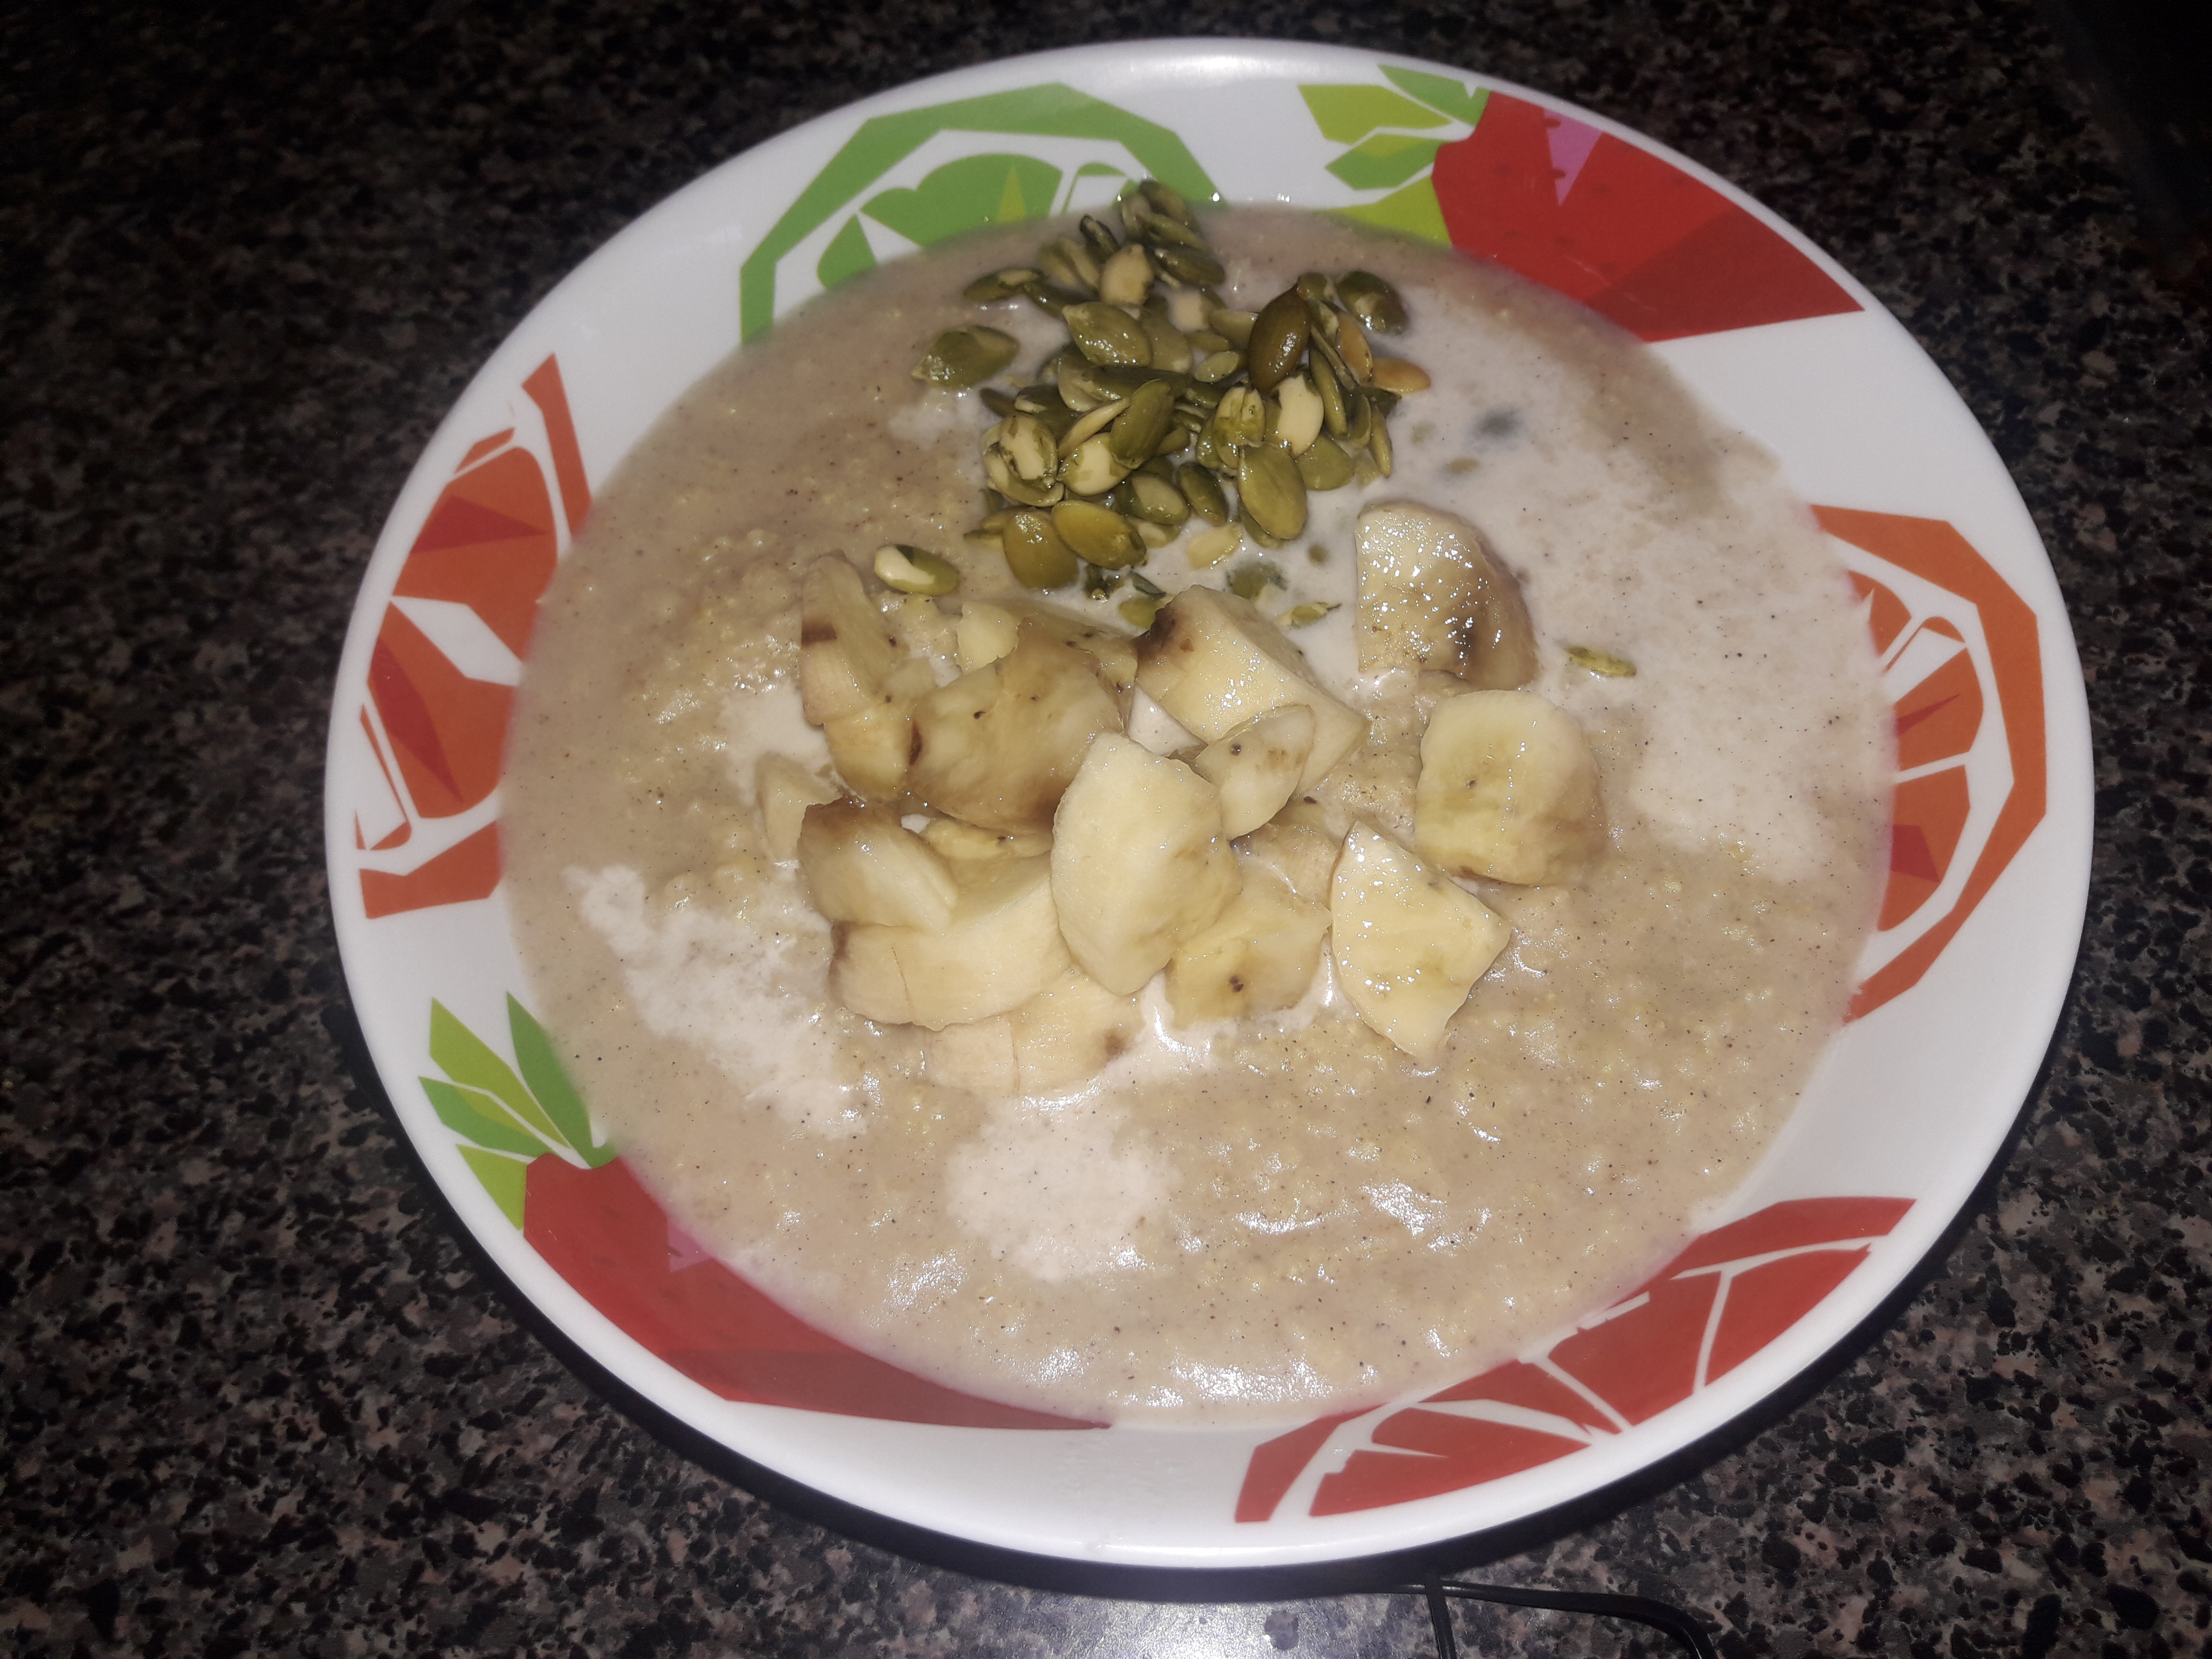 Millet Porridge